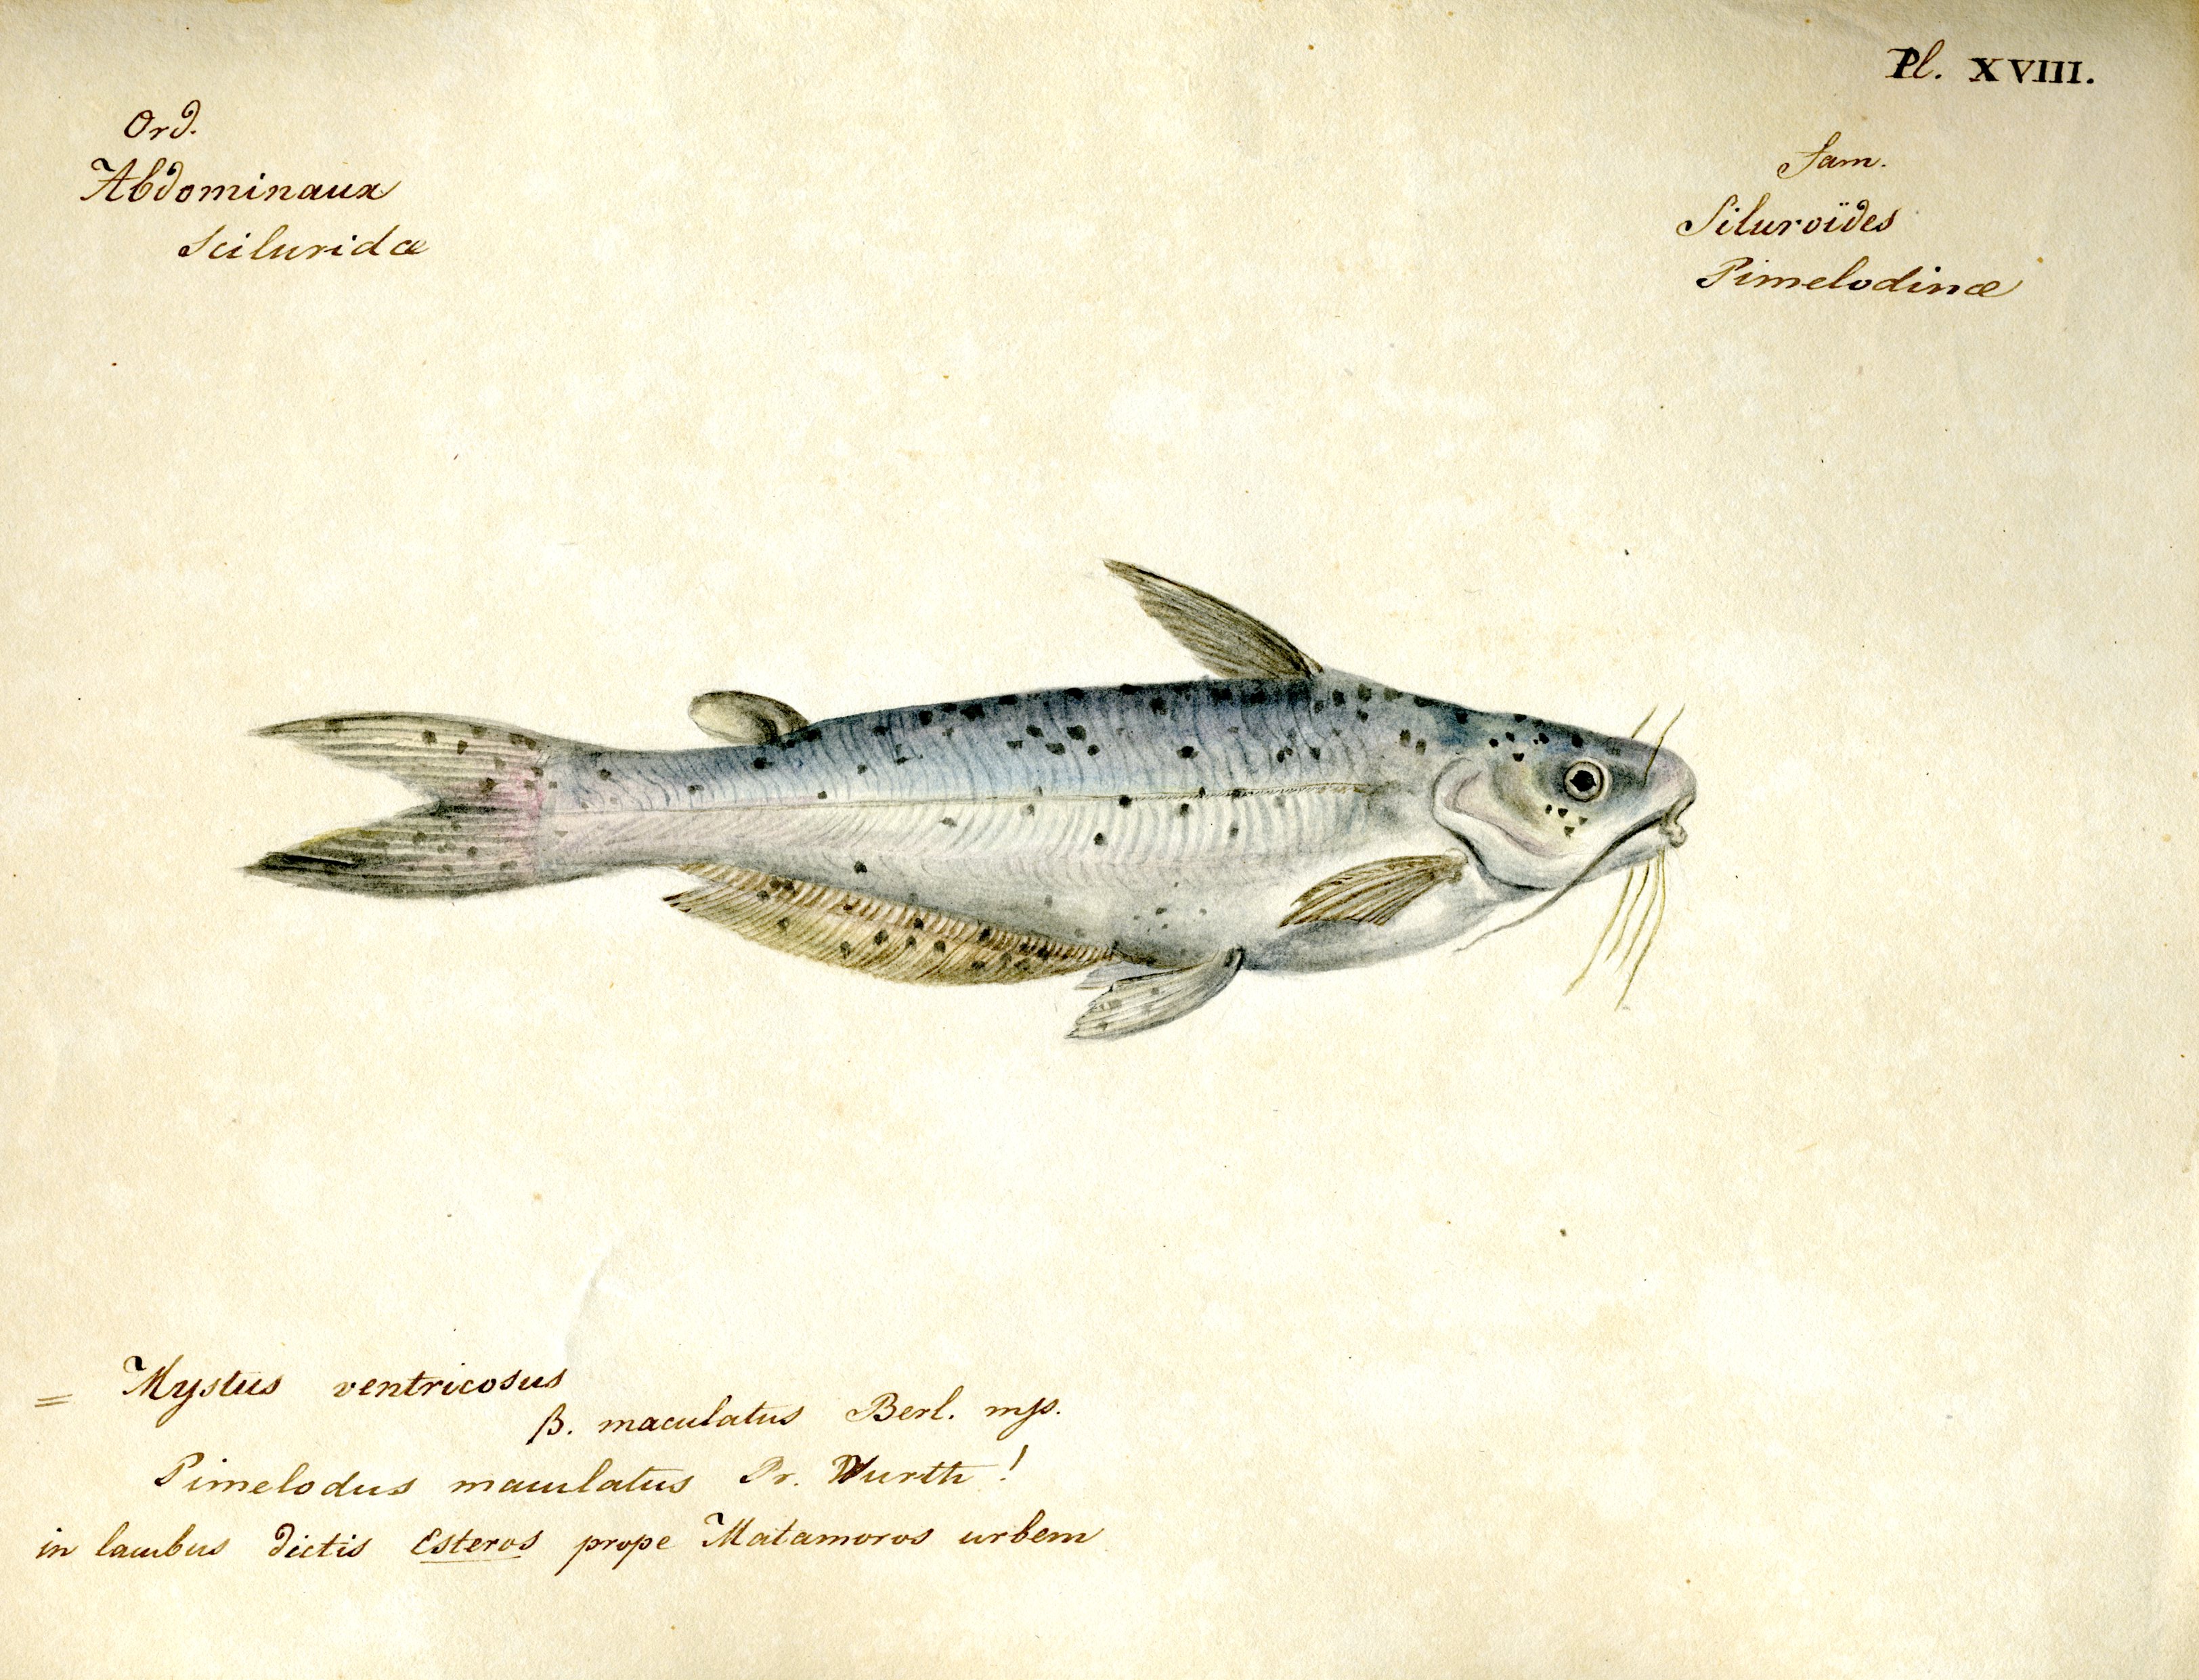 Berlandier Fish (Pimelodus maculatus), Record Unit 7052 - Jean Louis Berlandier Papers, Box 12, Folder 14, Smithsonian Institution Archives.